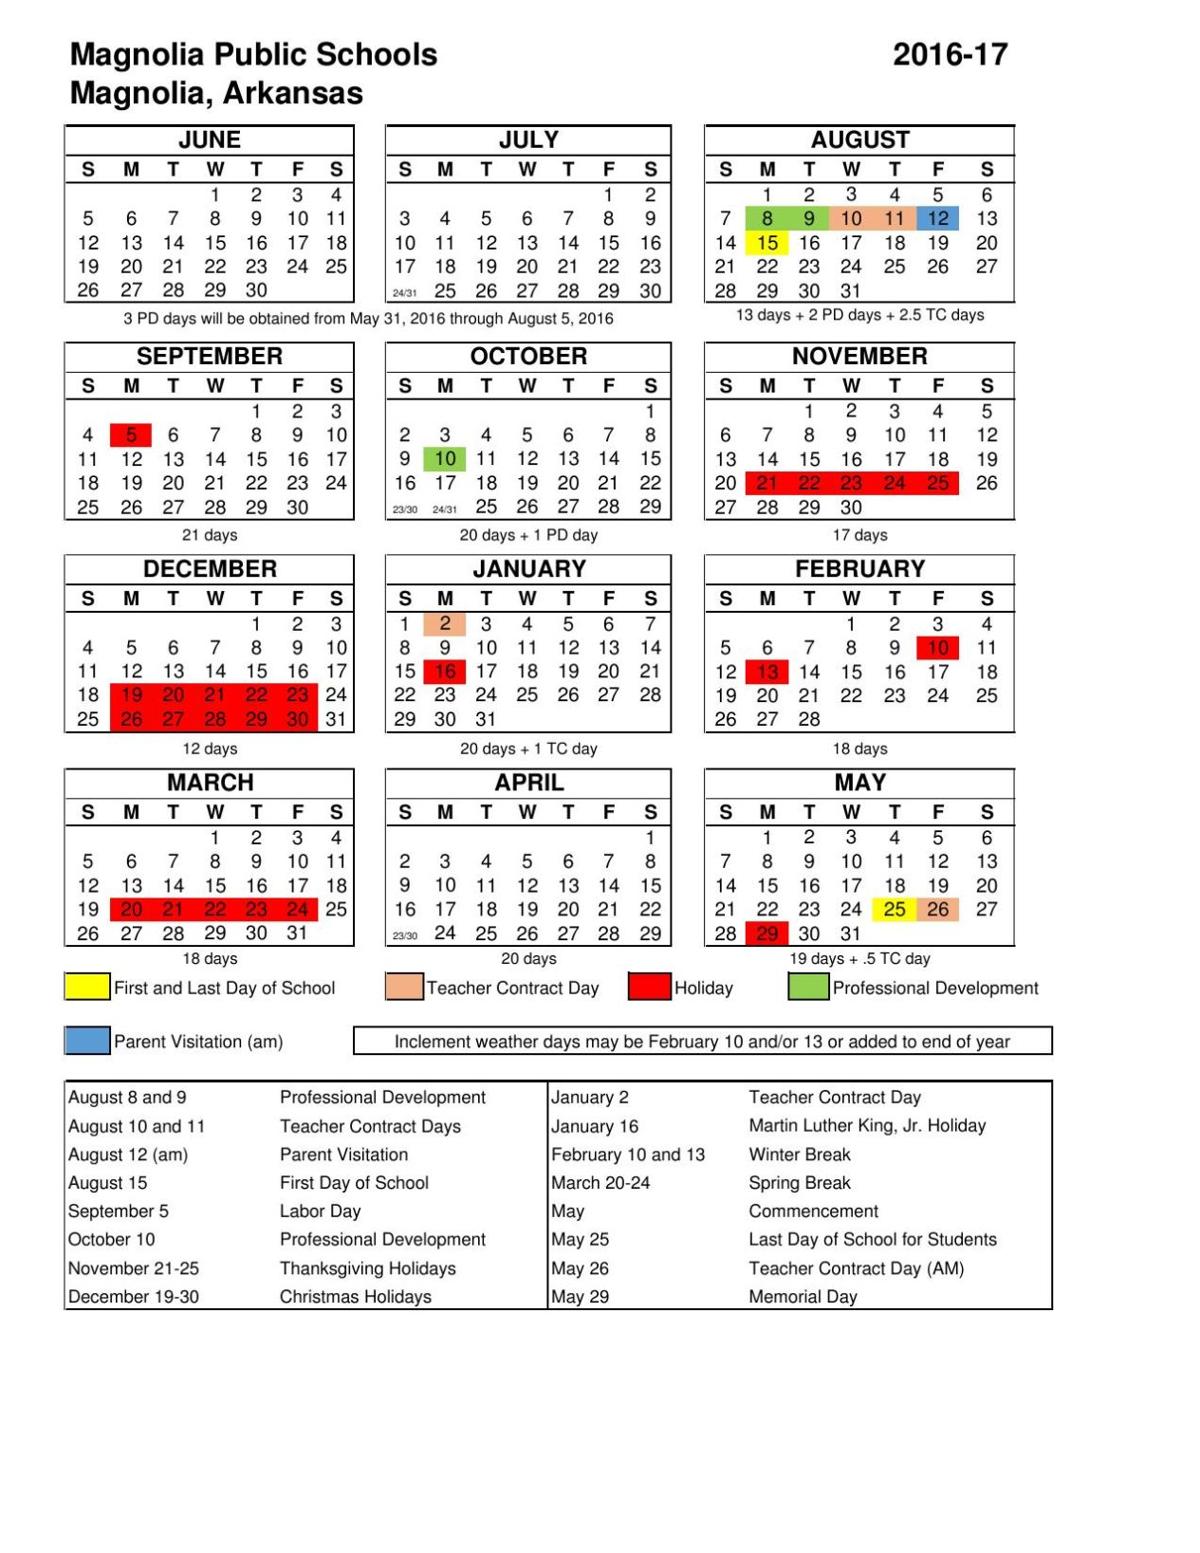 Magnolia school calendar 201617